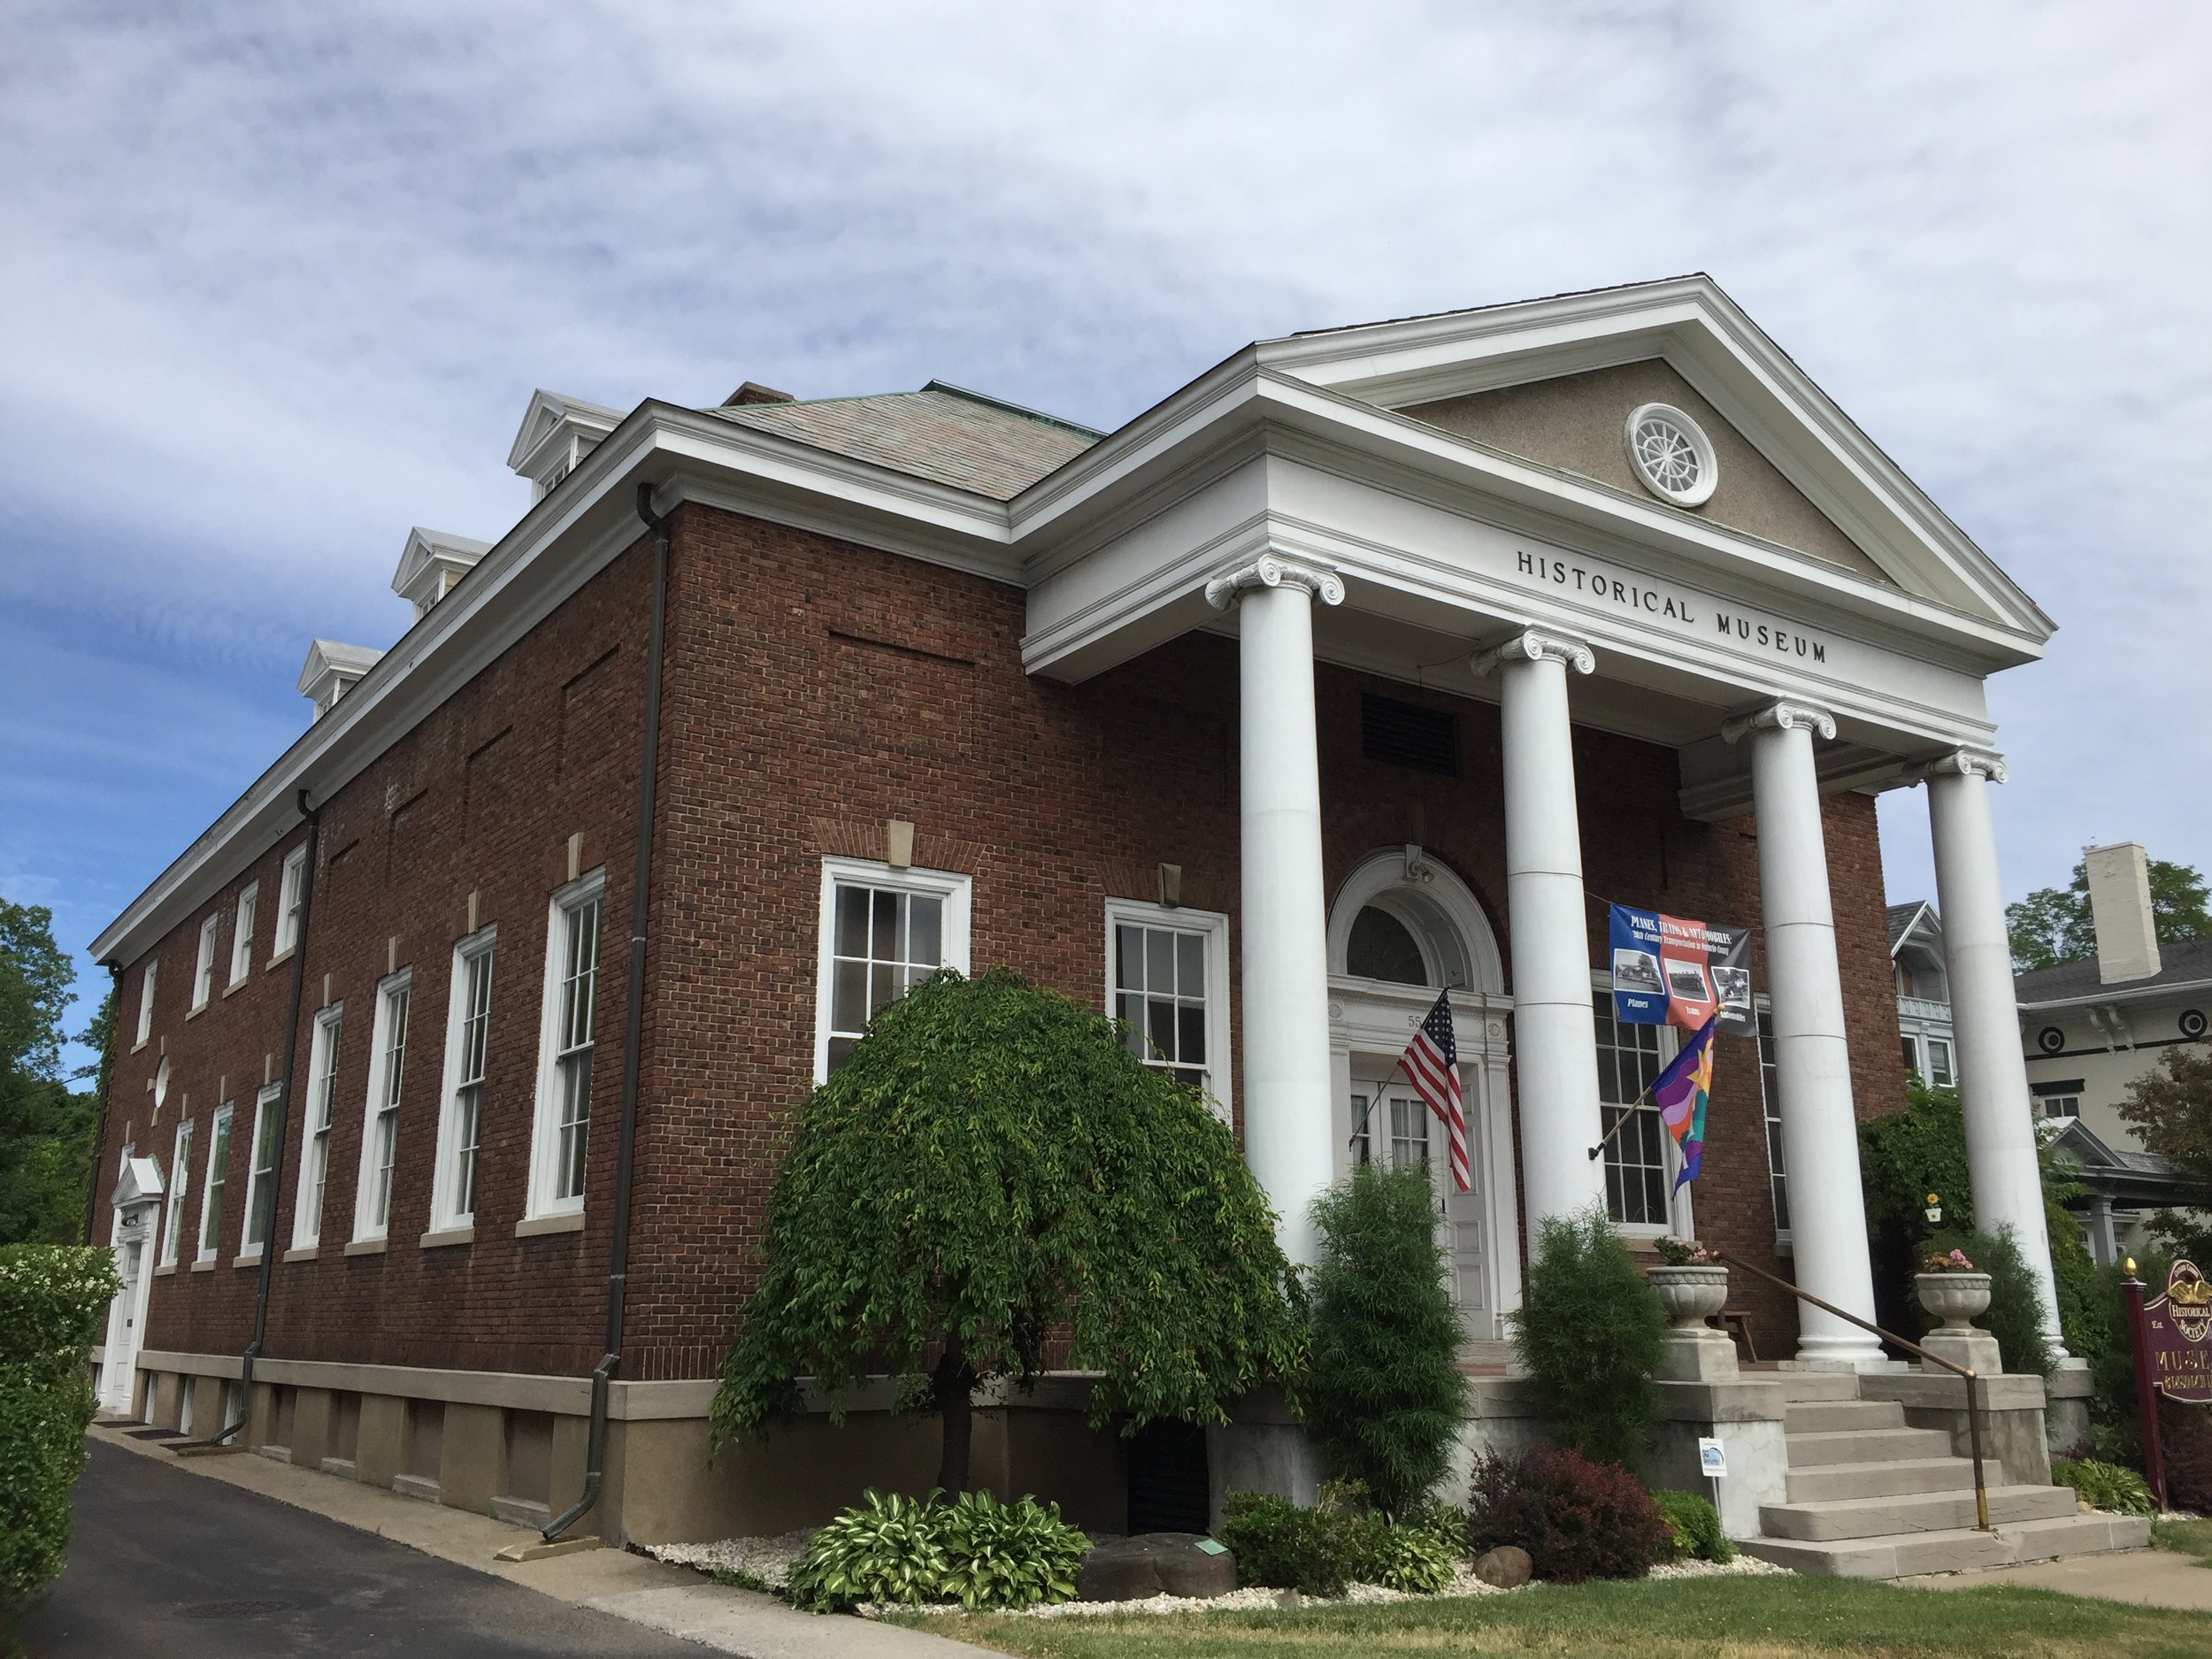 Ontario County Historical Society Museum